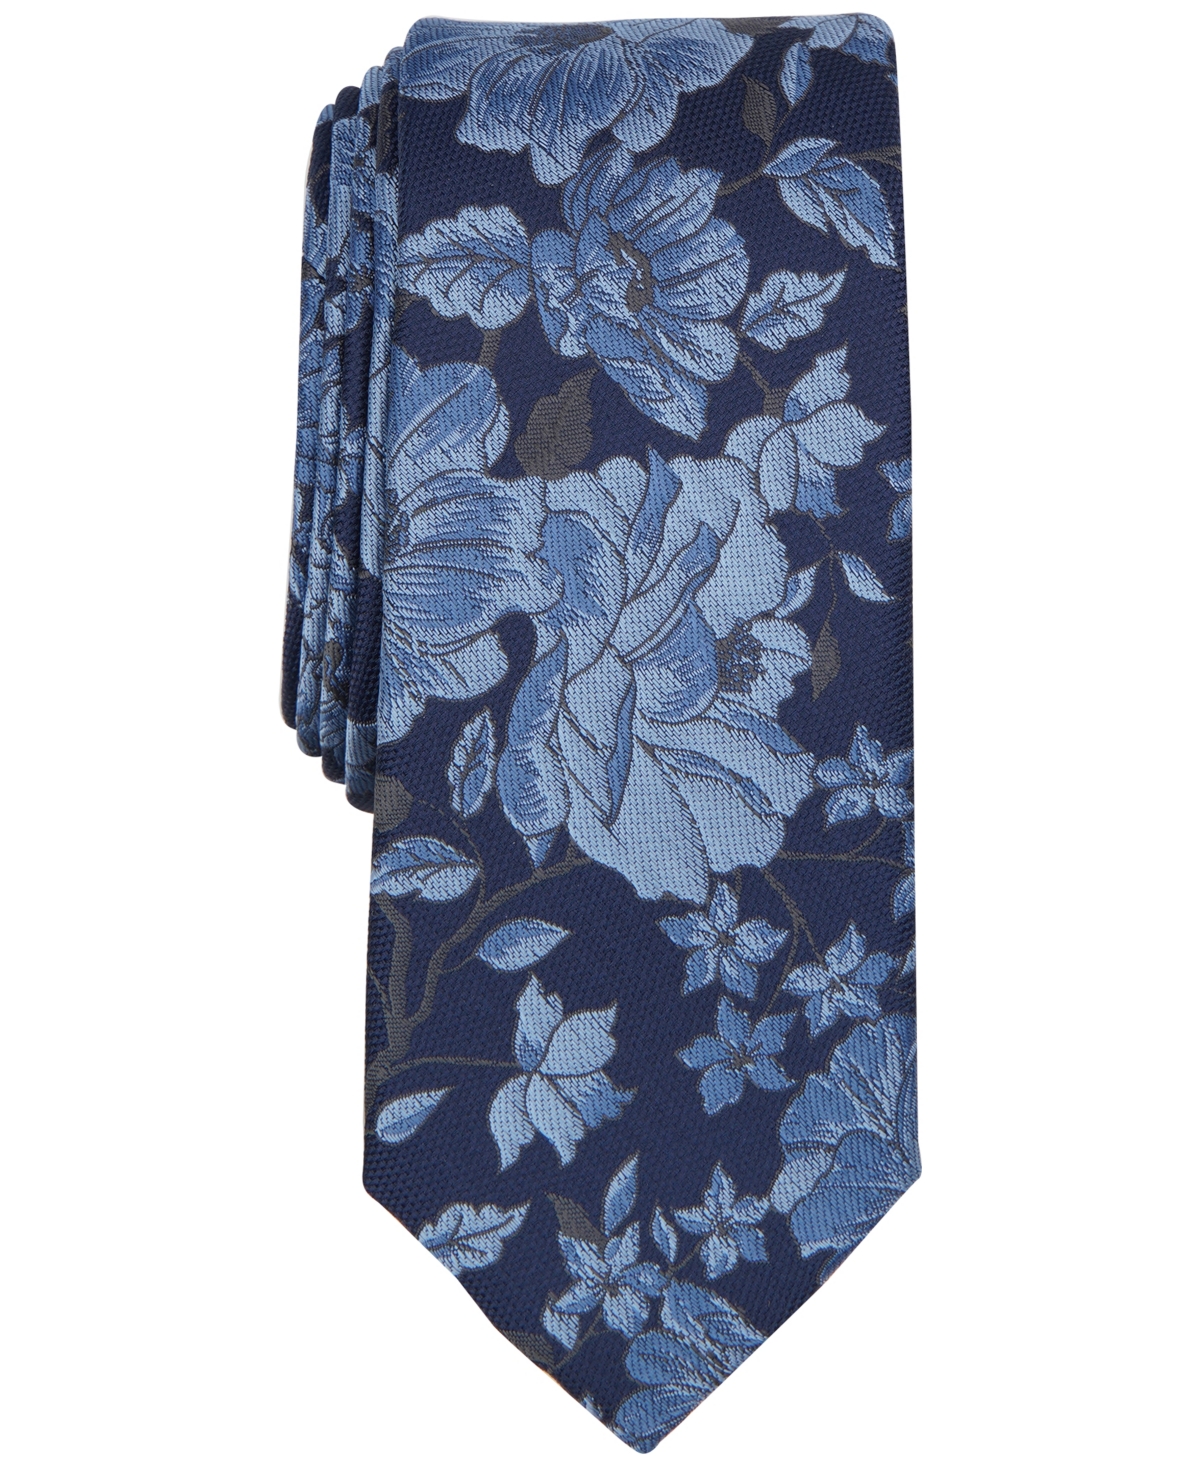 Men's Darlington Floral Tie, Created for Macy's - Burgundy